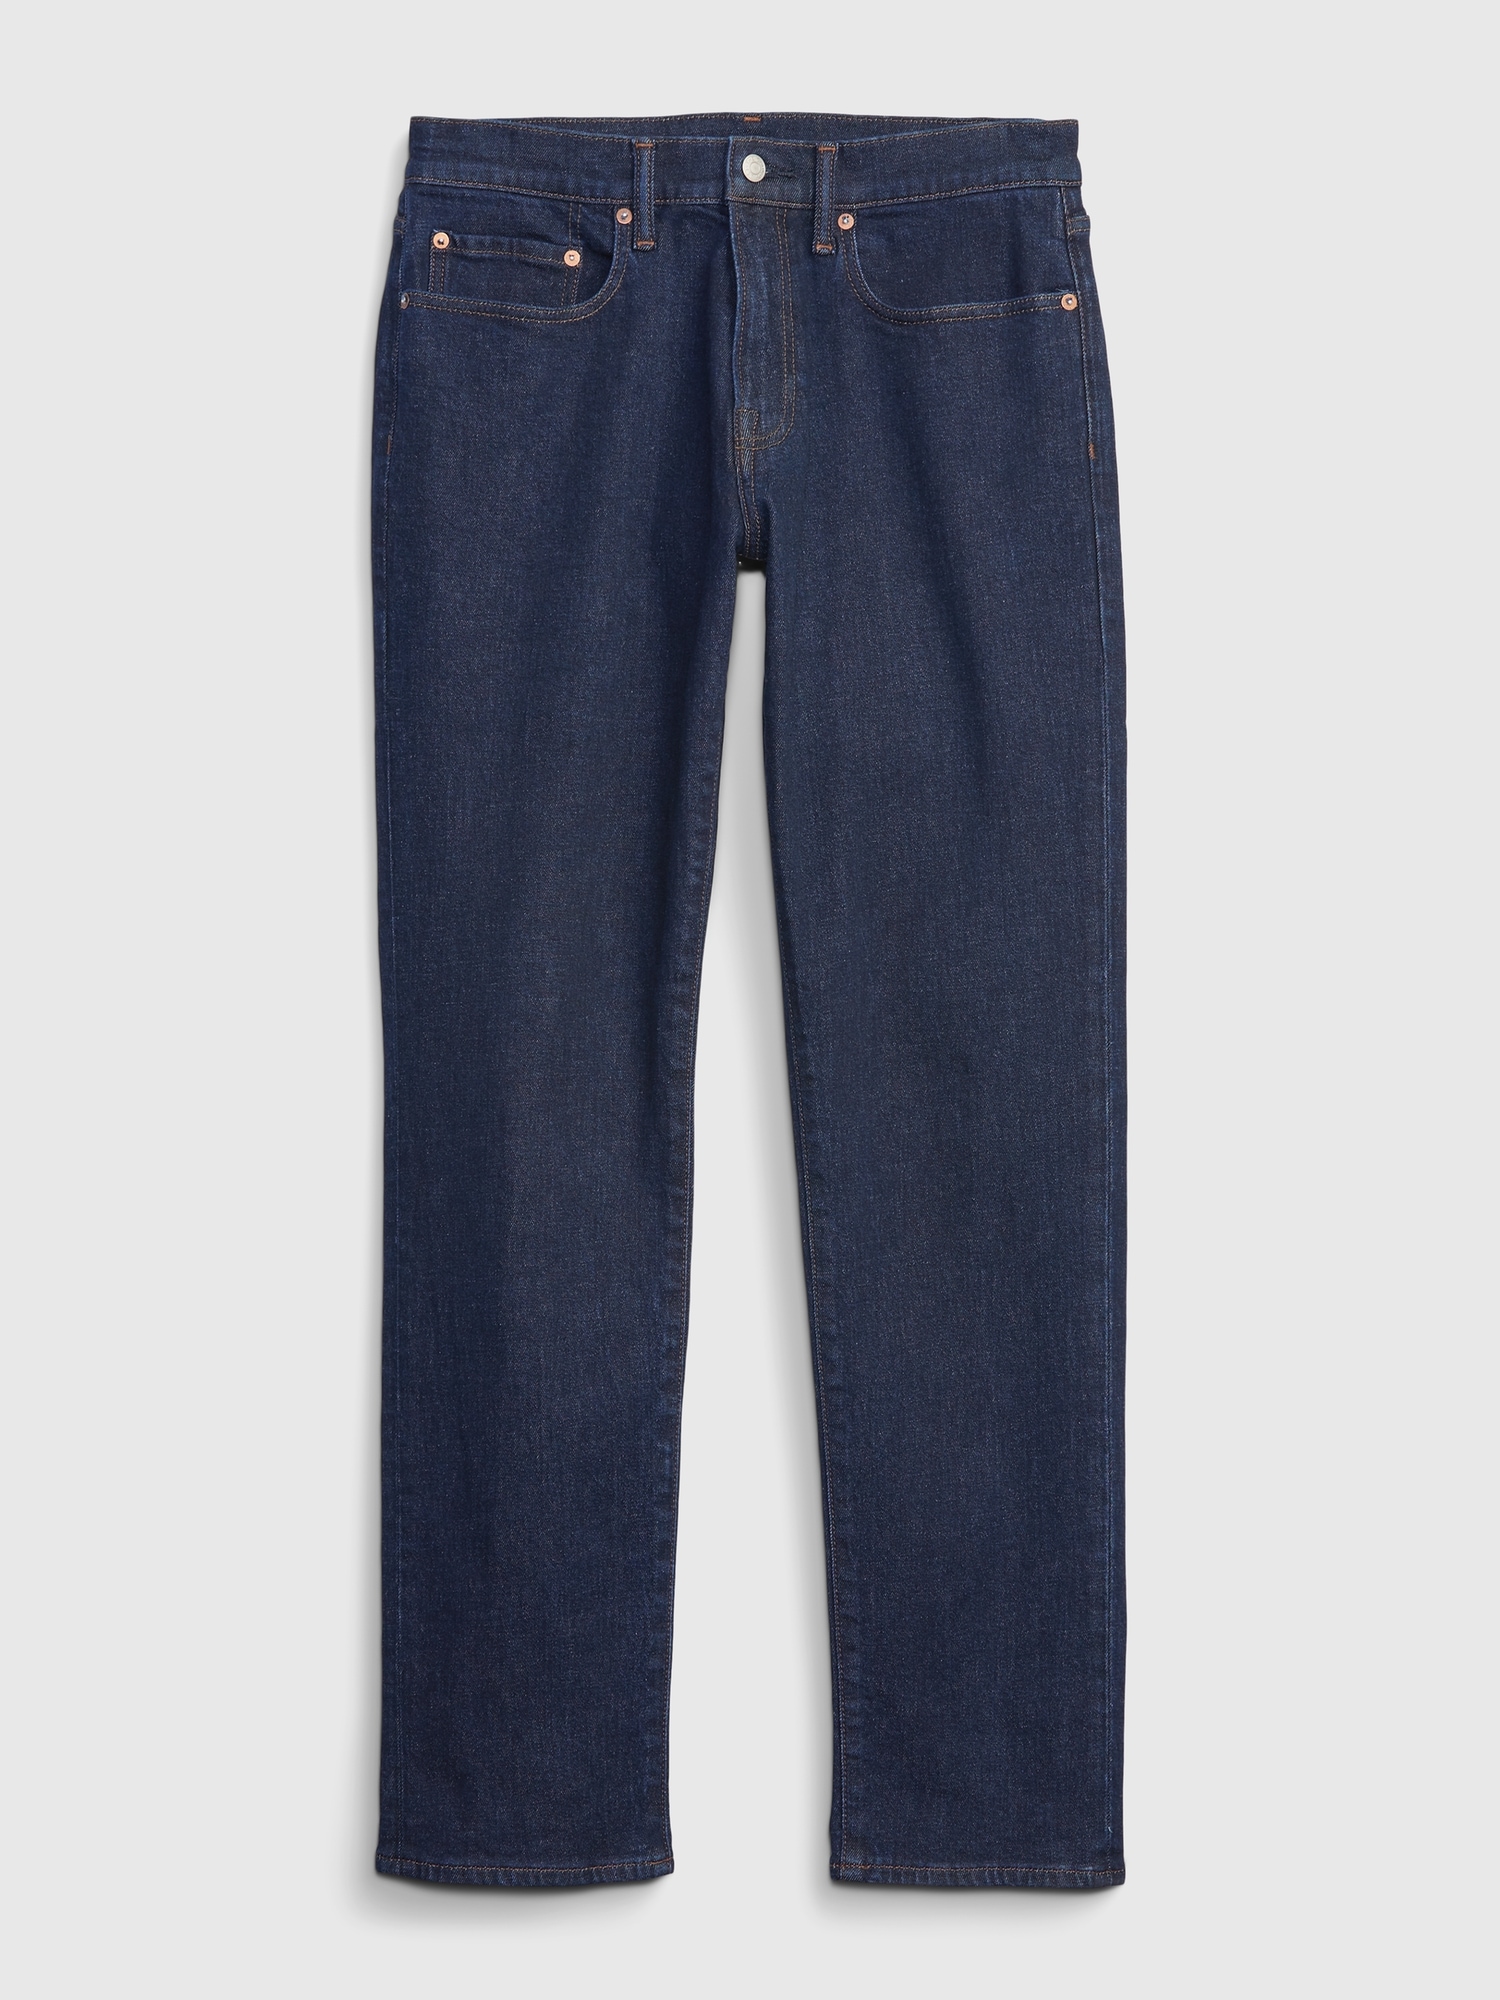 GAP Cone Denim Men's Distressed Jeans in Slim Fit with GapFlex NEW 32x30